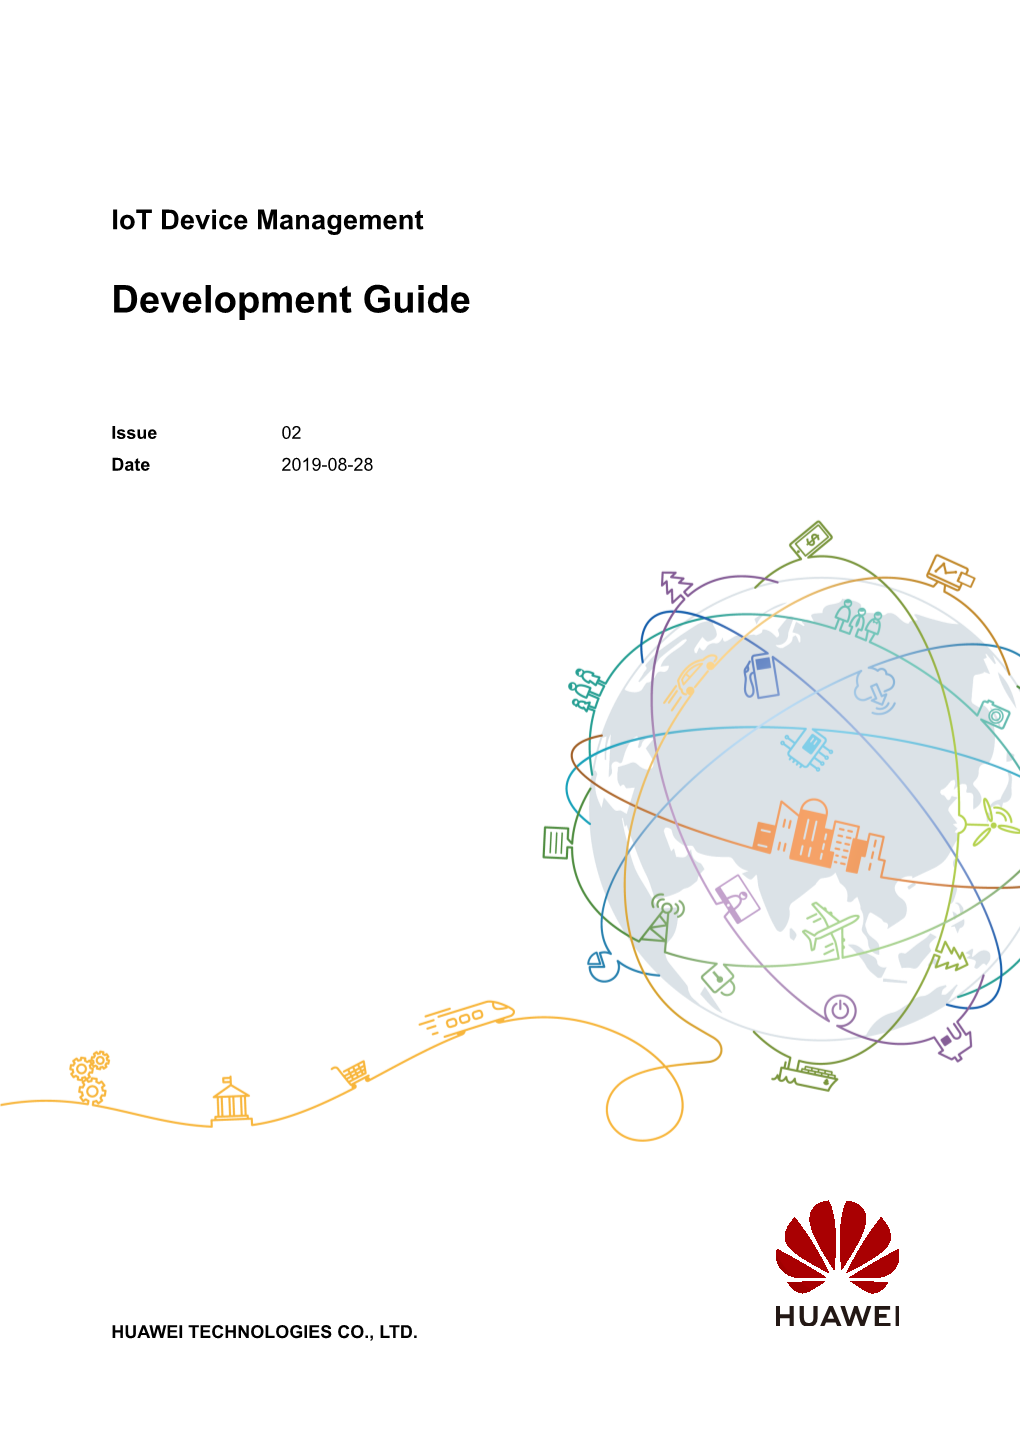 Iot Device Management Development Guide Contents